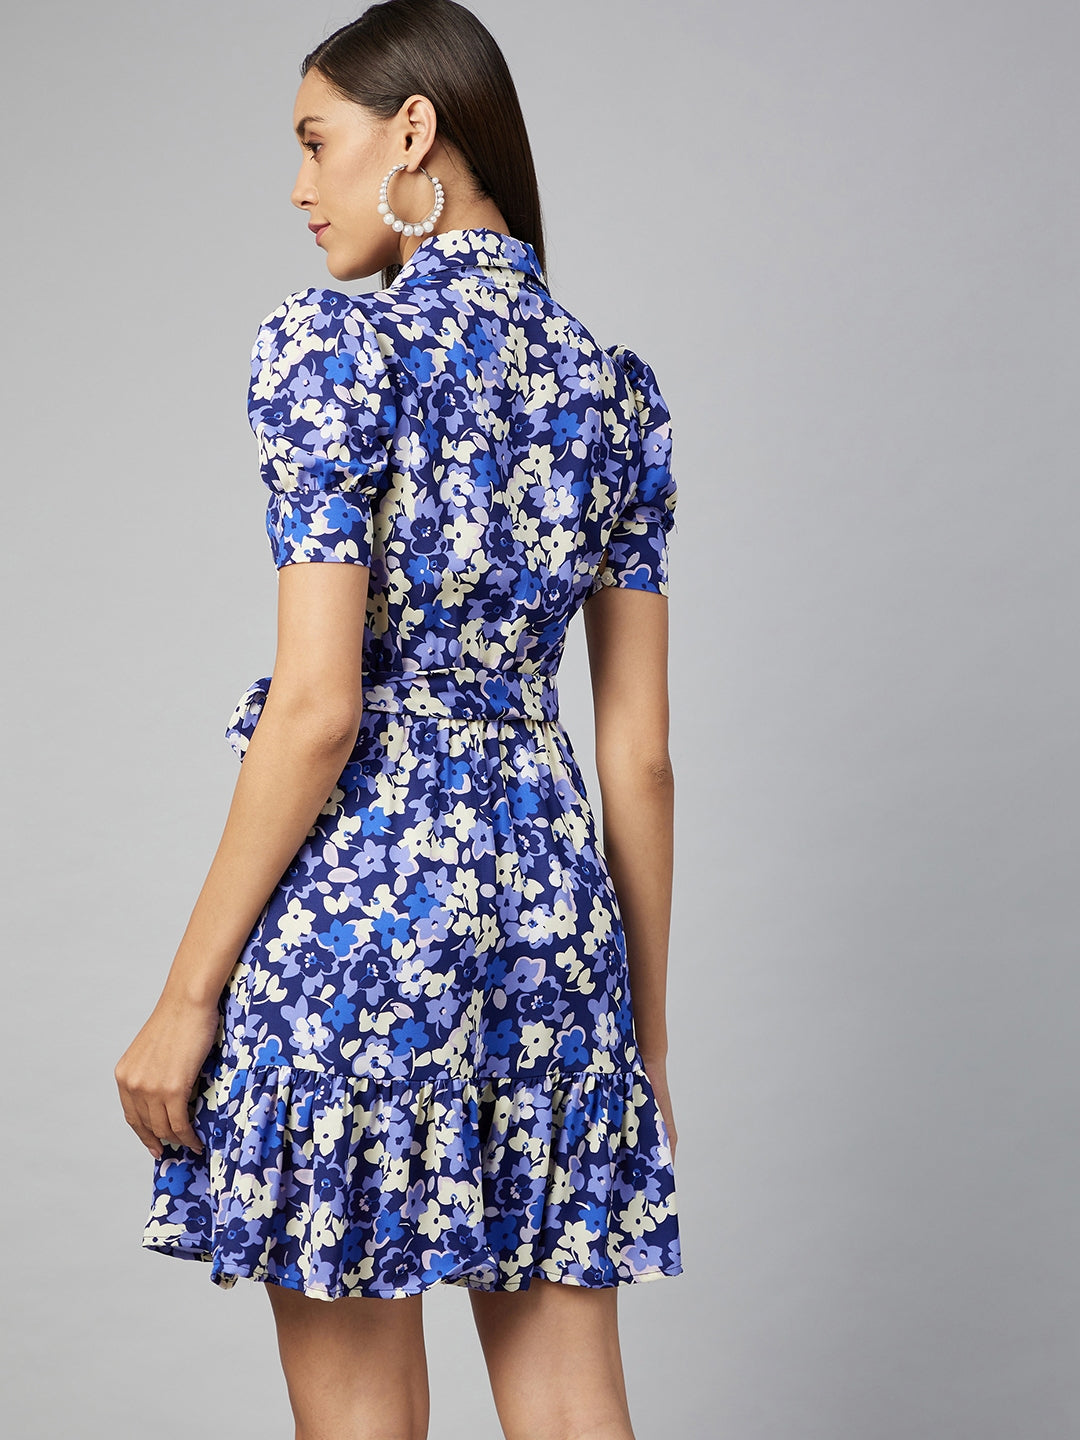 Women's Blue Overlap Floral Polyester Dress